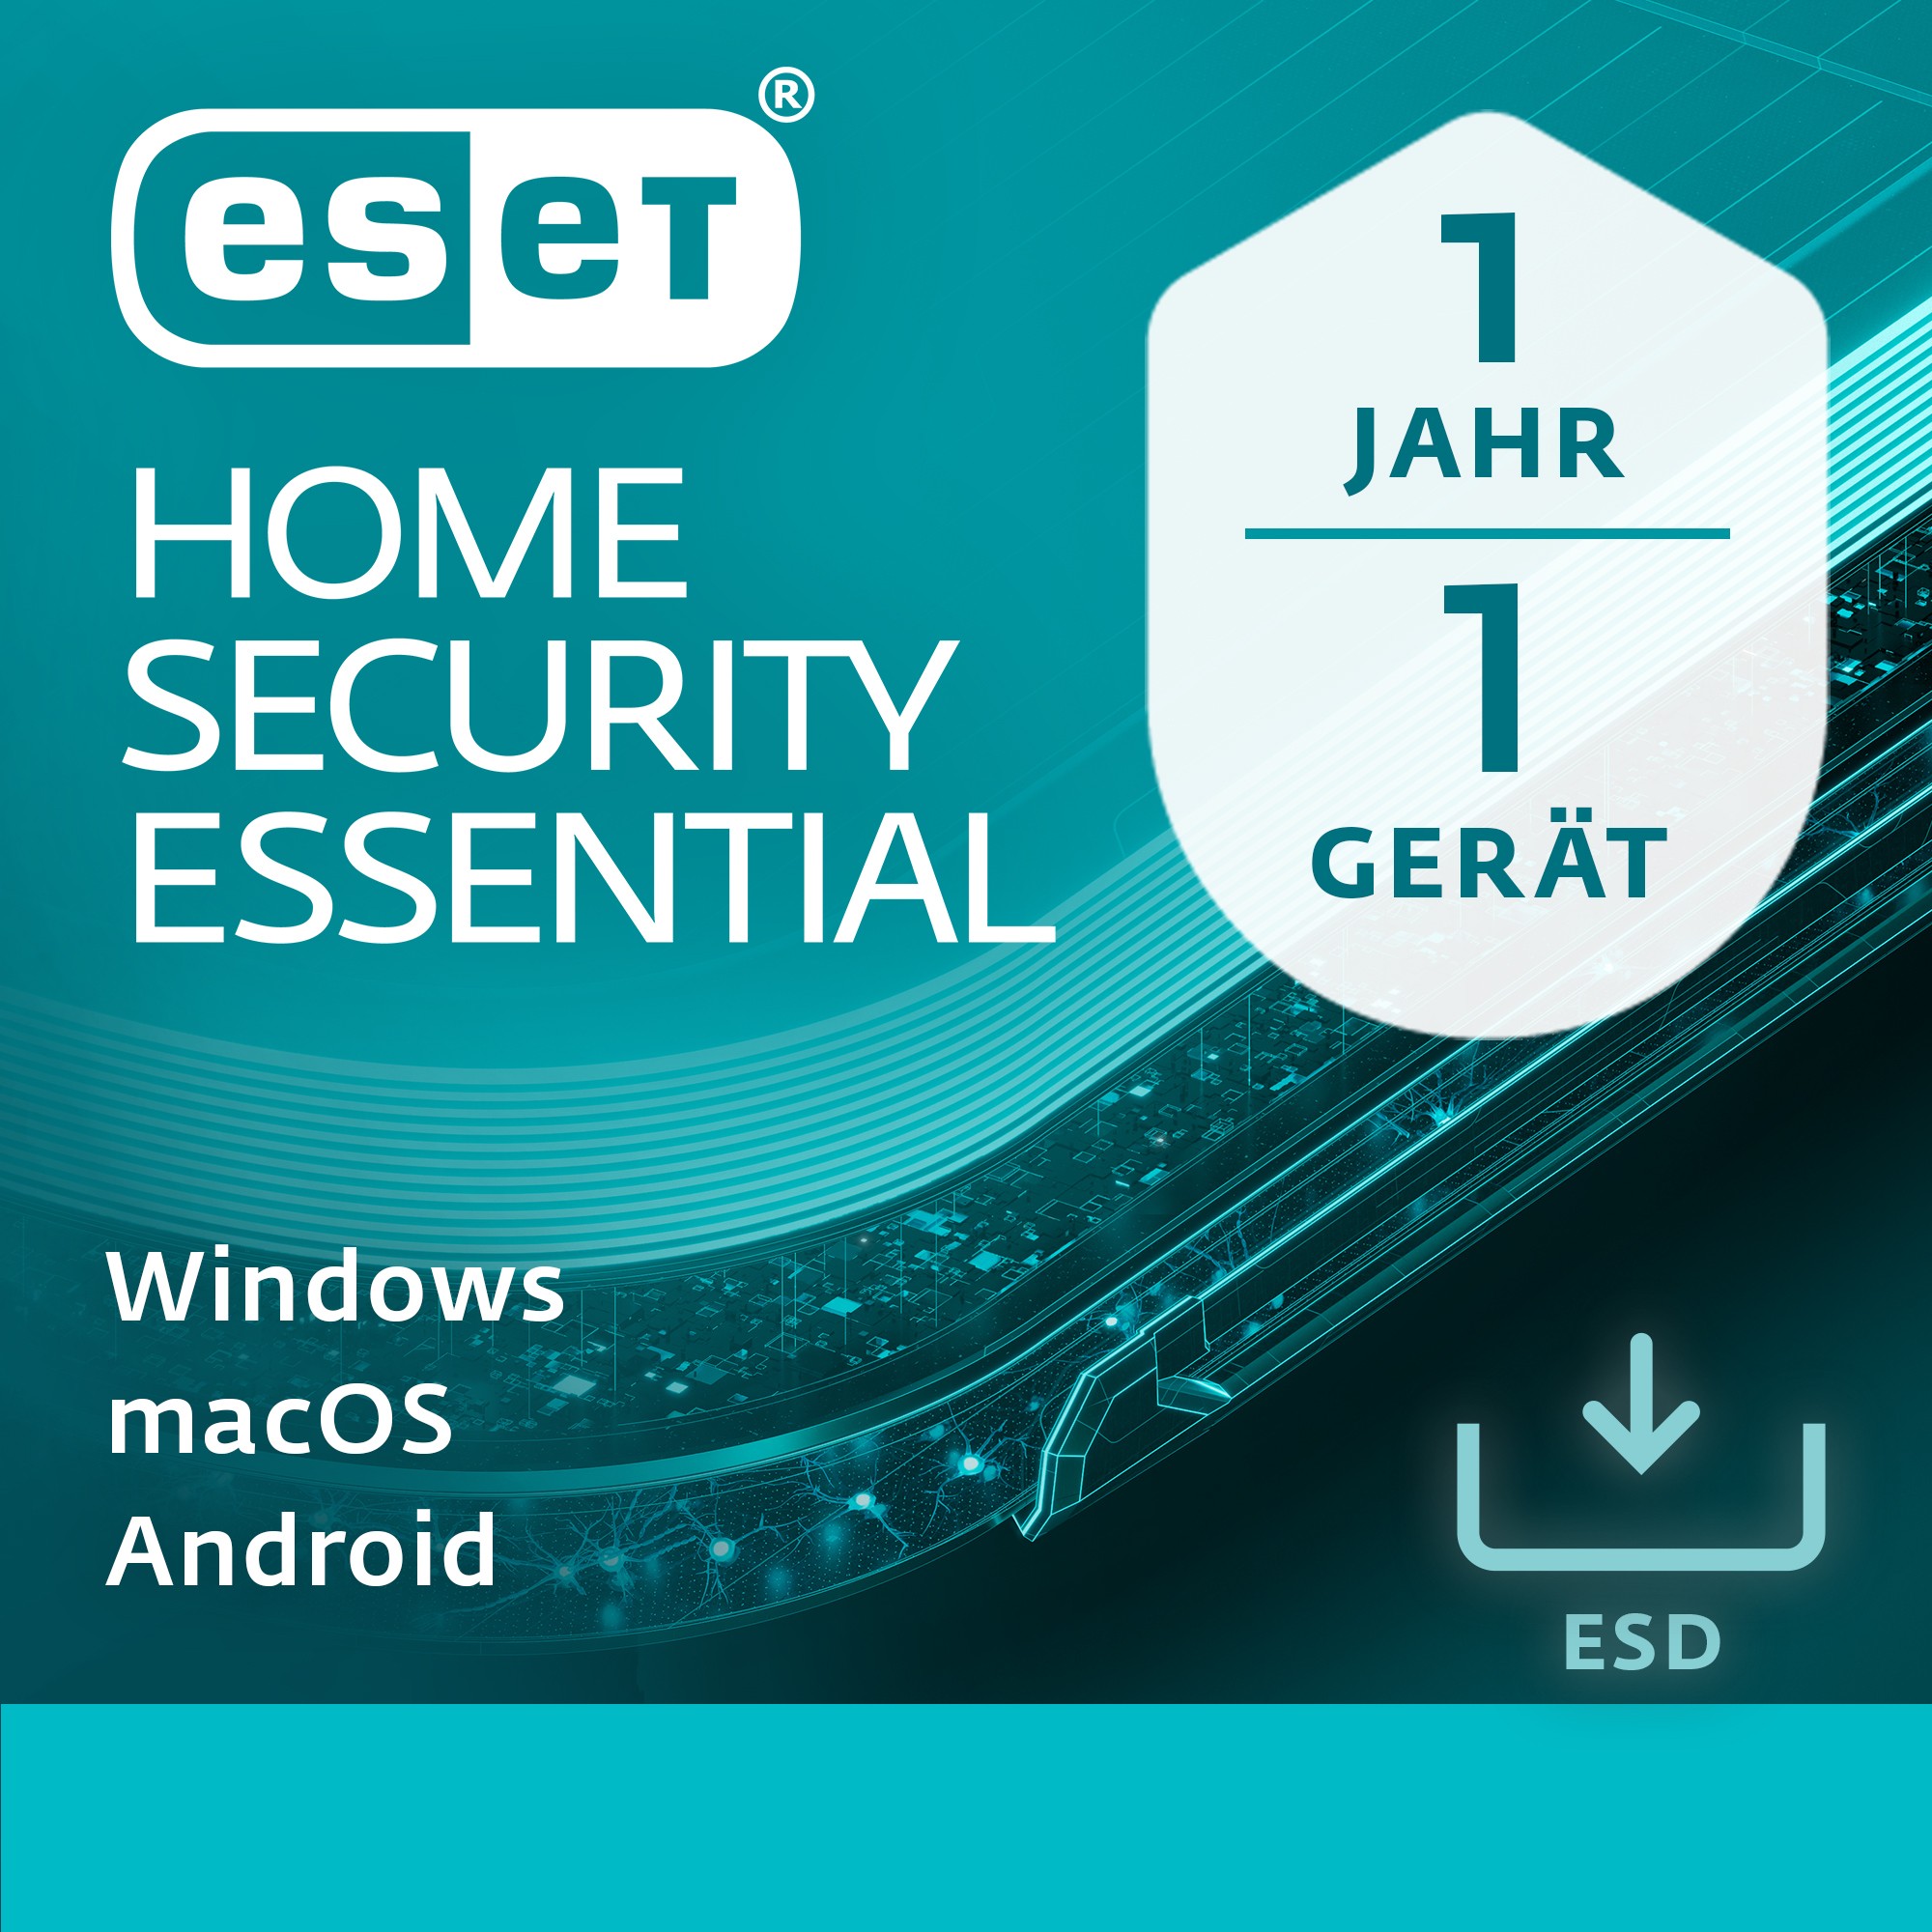 ESET EHSE-N1A1-VAKT-E, ESD-Lizenzen, ESET Home Security  (BILD1)